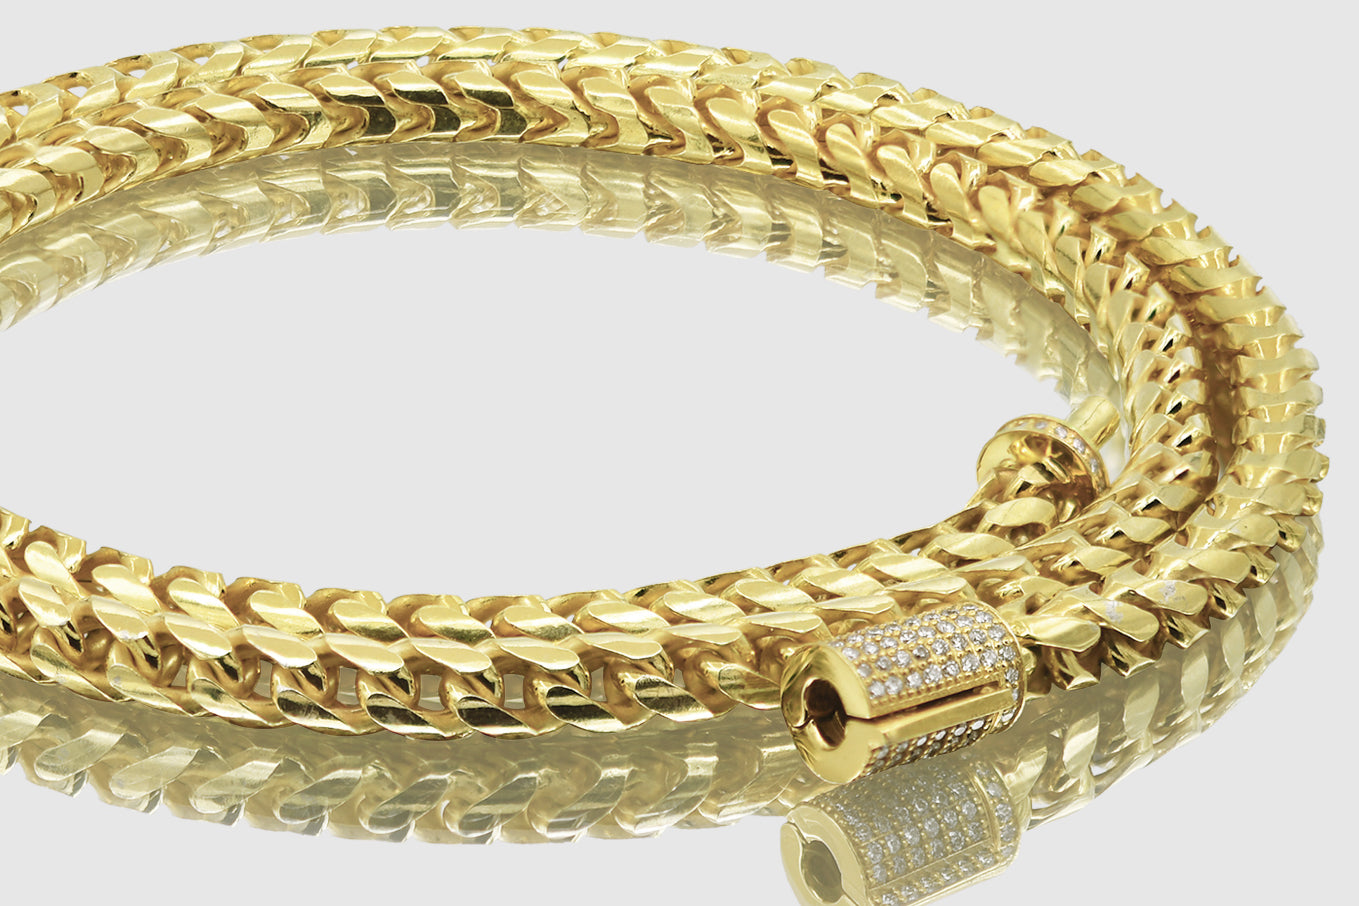 Diamond Lock Necklace 14K Yellow Gold